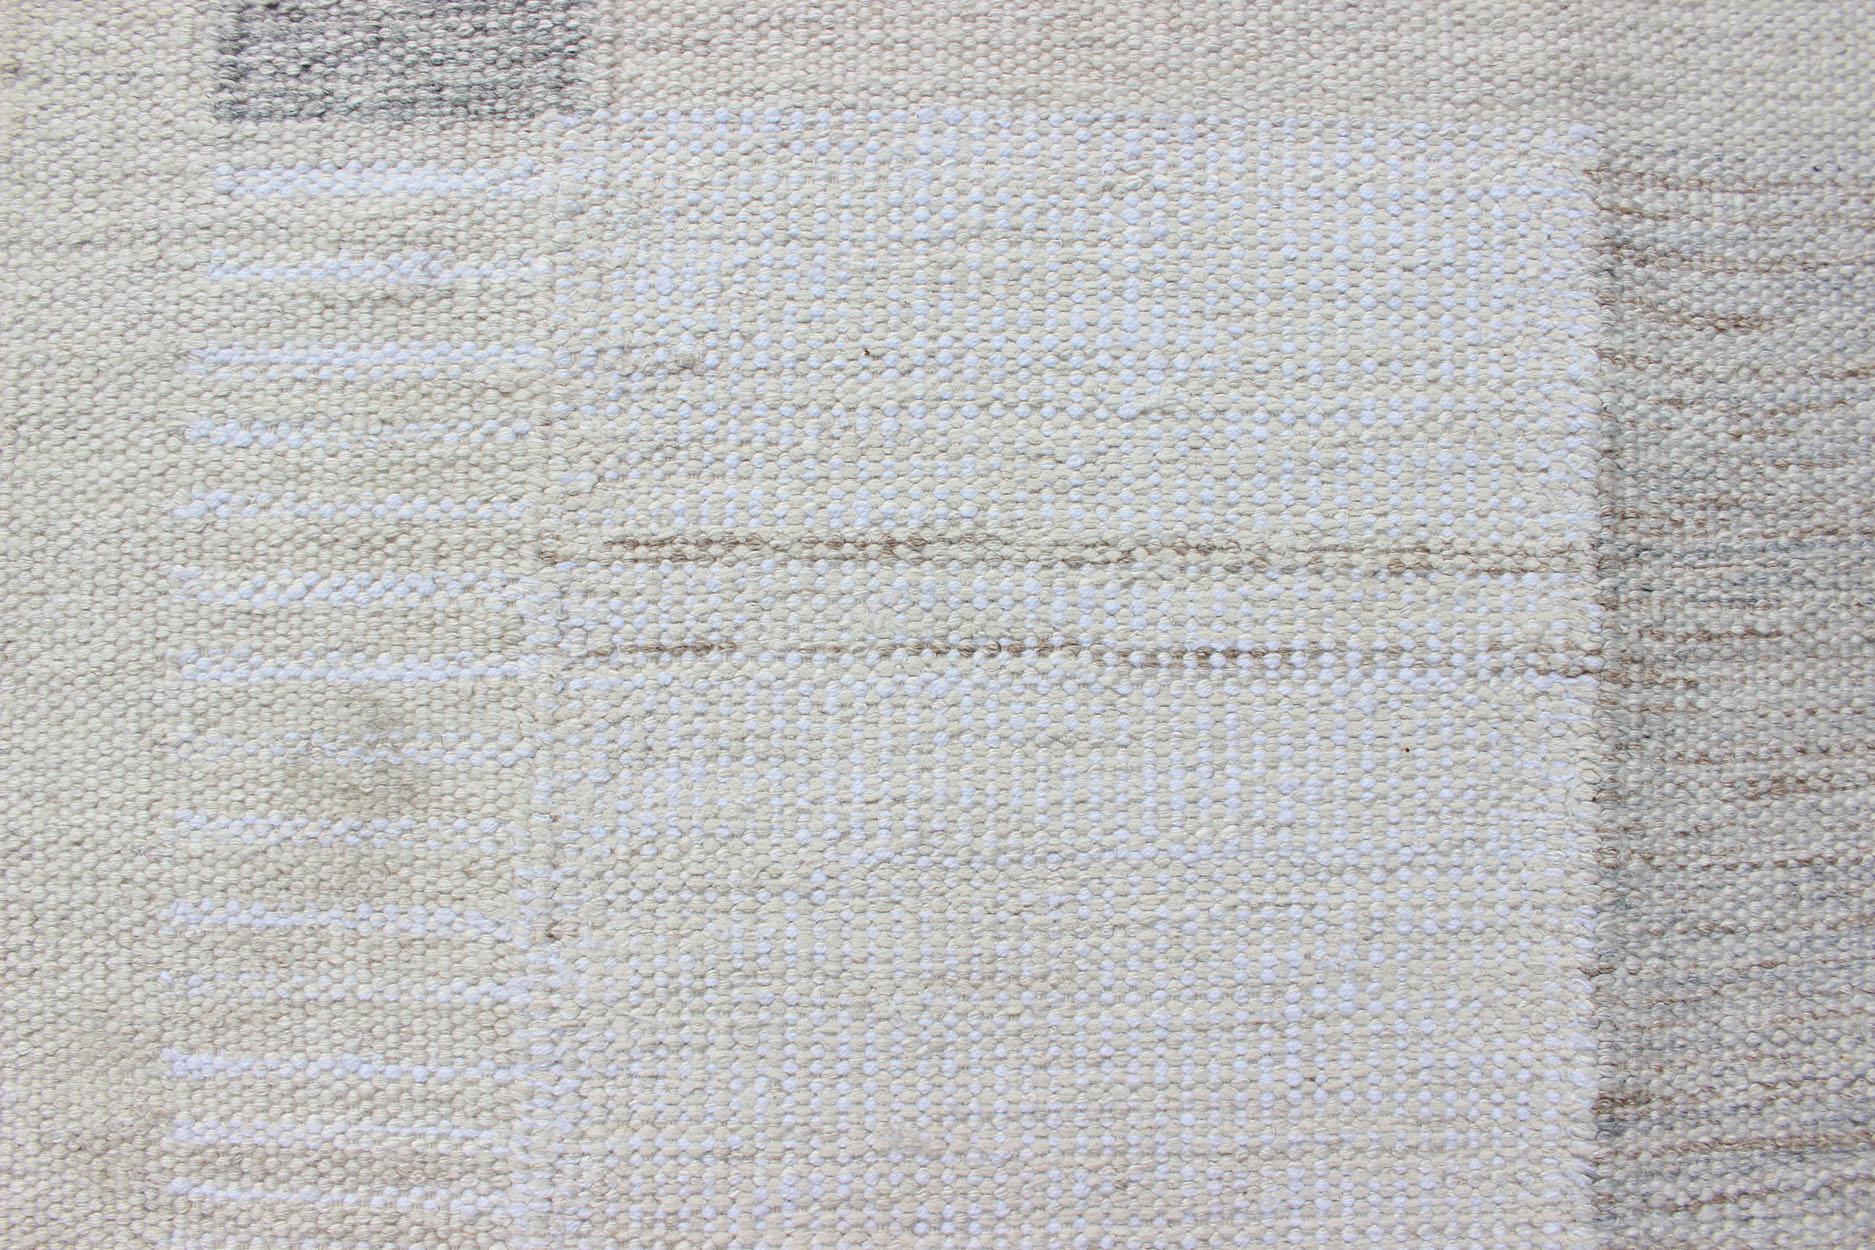 Modern Scandinavian Flat-Weave Rug Design in Gray, beige, Creams & White Tones For Sale 4